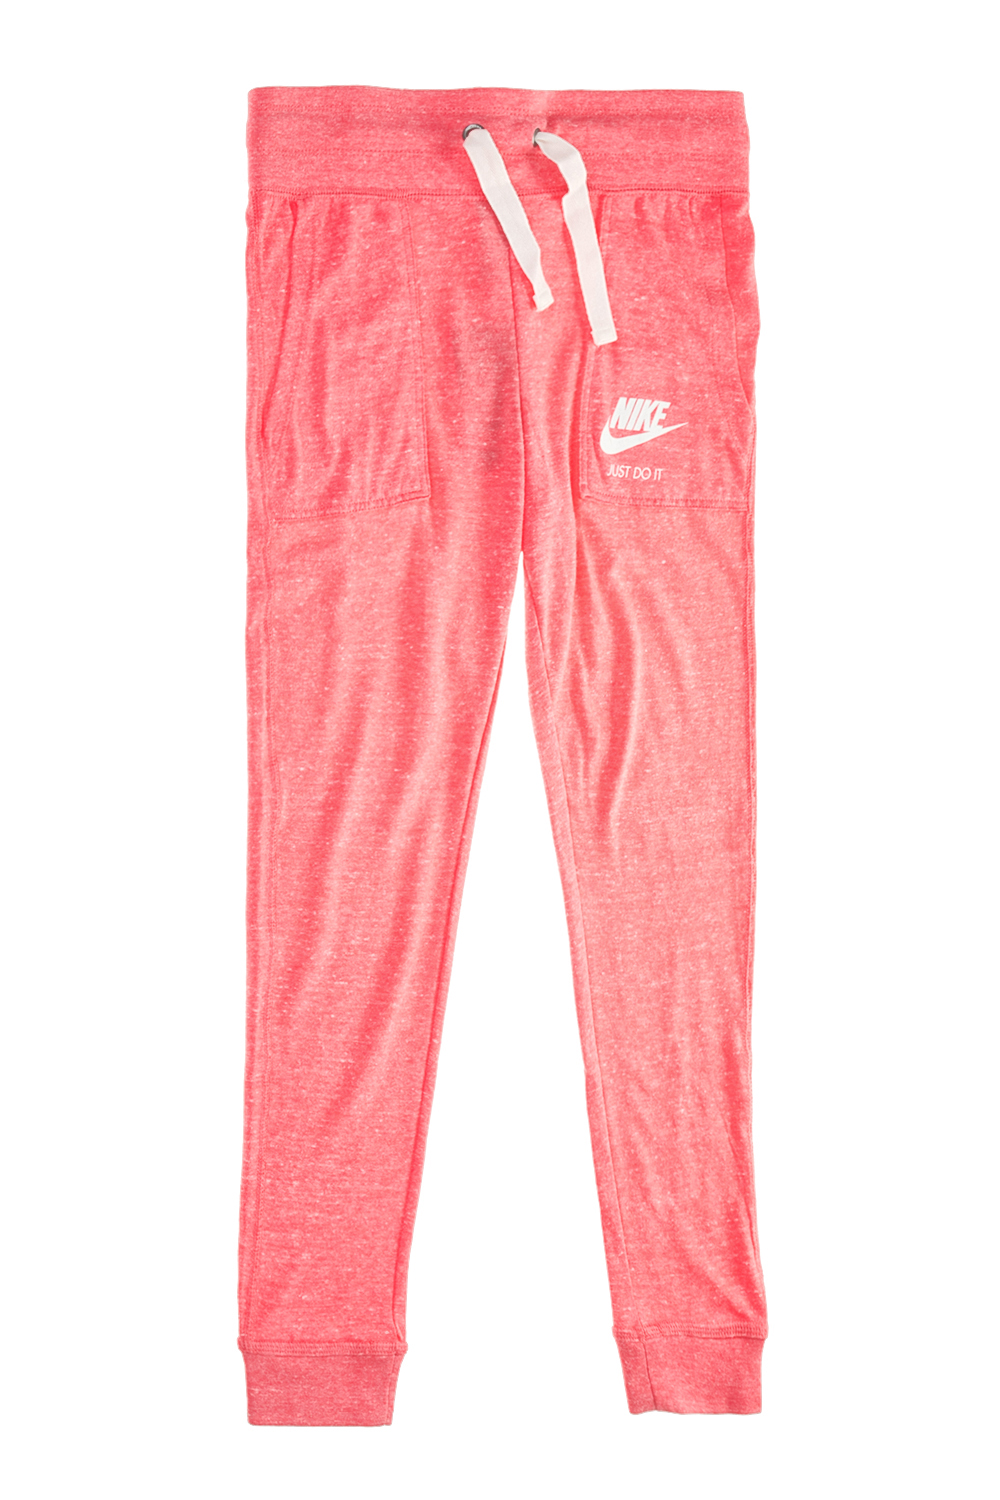 NIKE - Κοριτσίστικο παντελόνι φόρμας NIKE NSW VNTG ροζ Παιδικά/Girls/Ρούχα/Αθλητικά